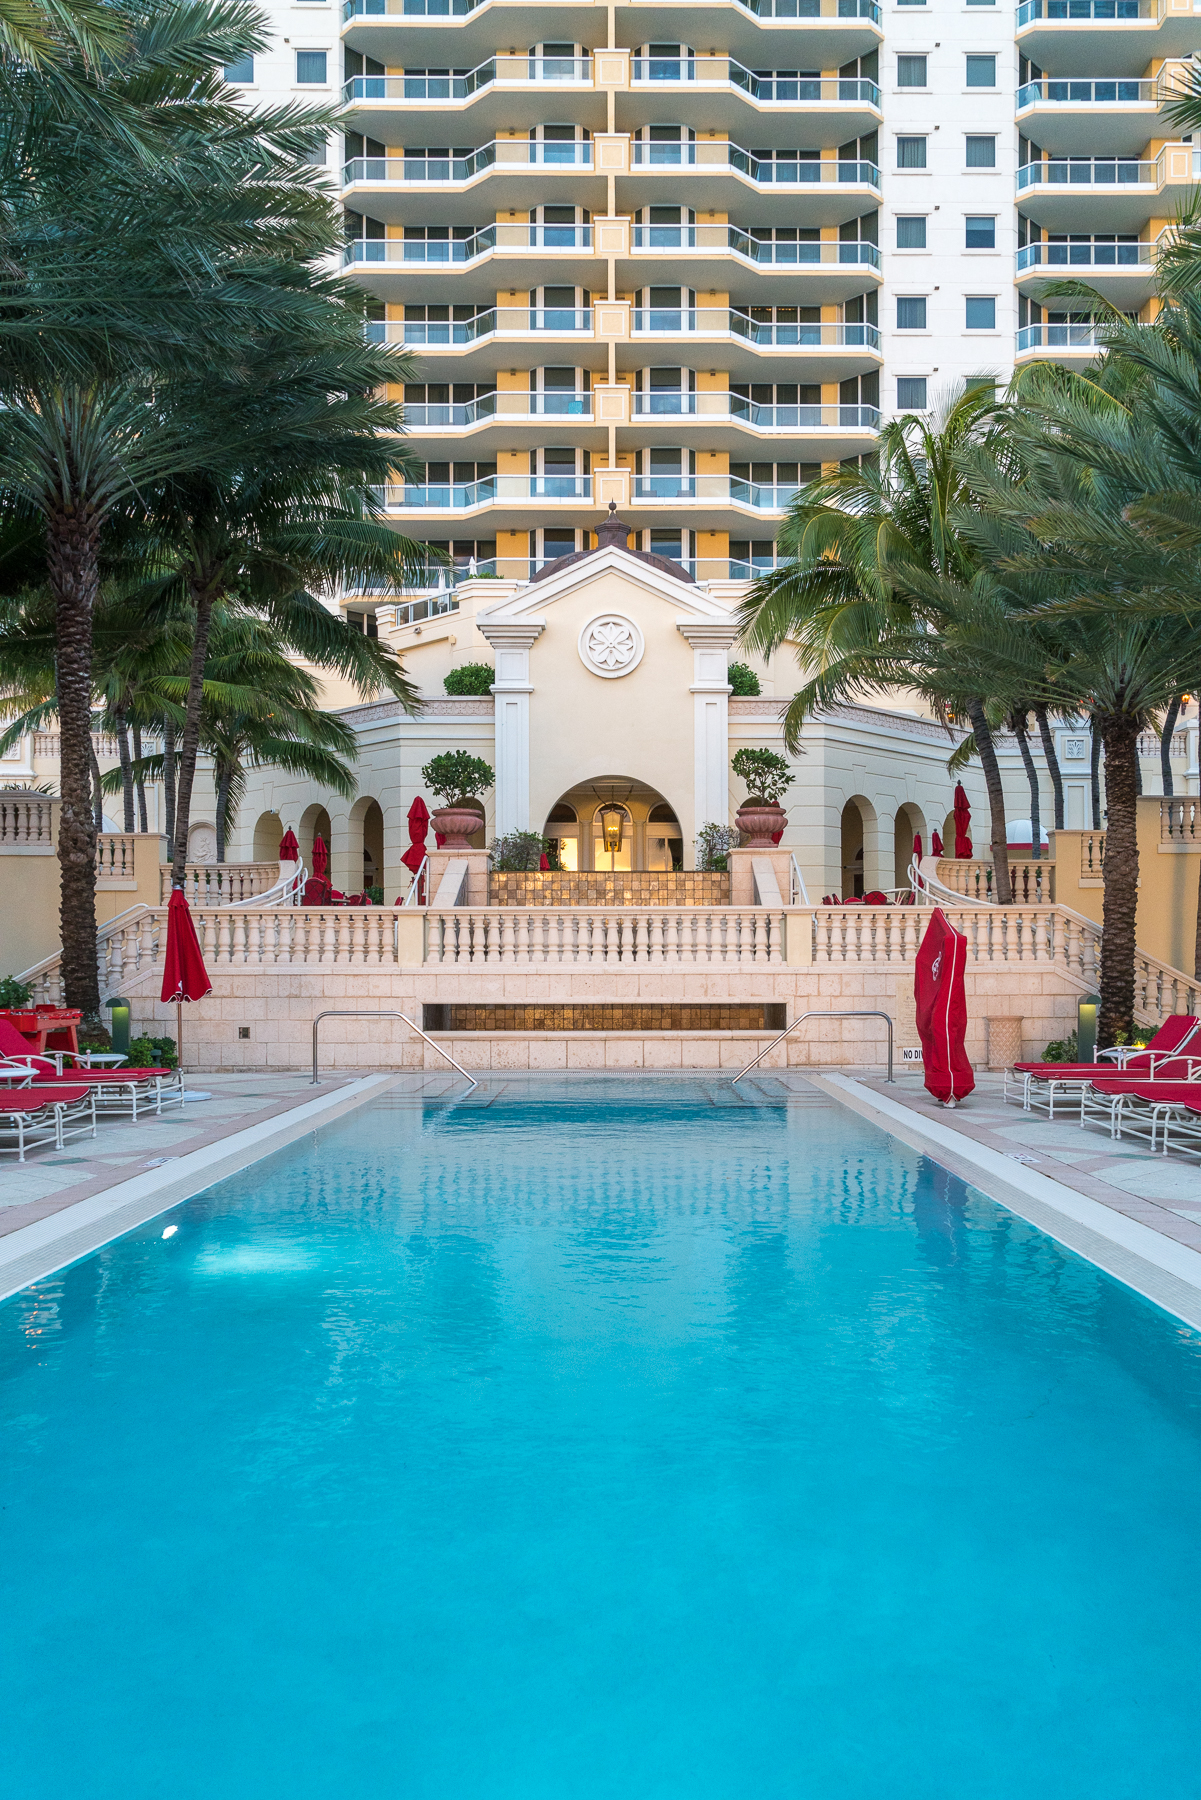 The award-winning Acqualina Resort & Spa provides the perfect getaway